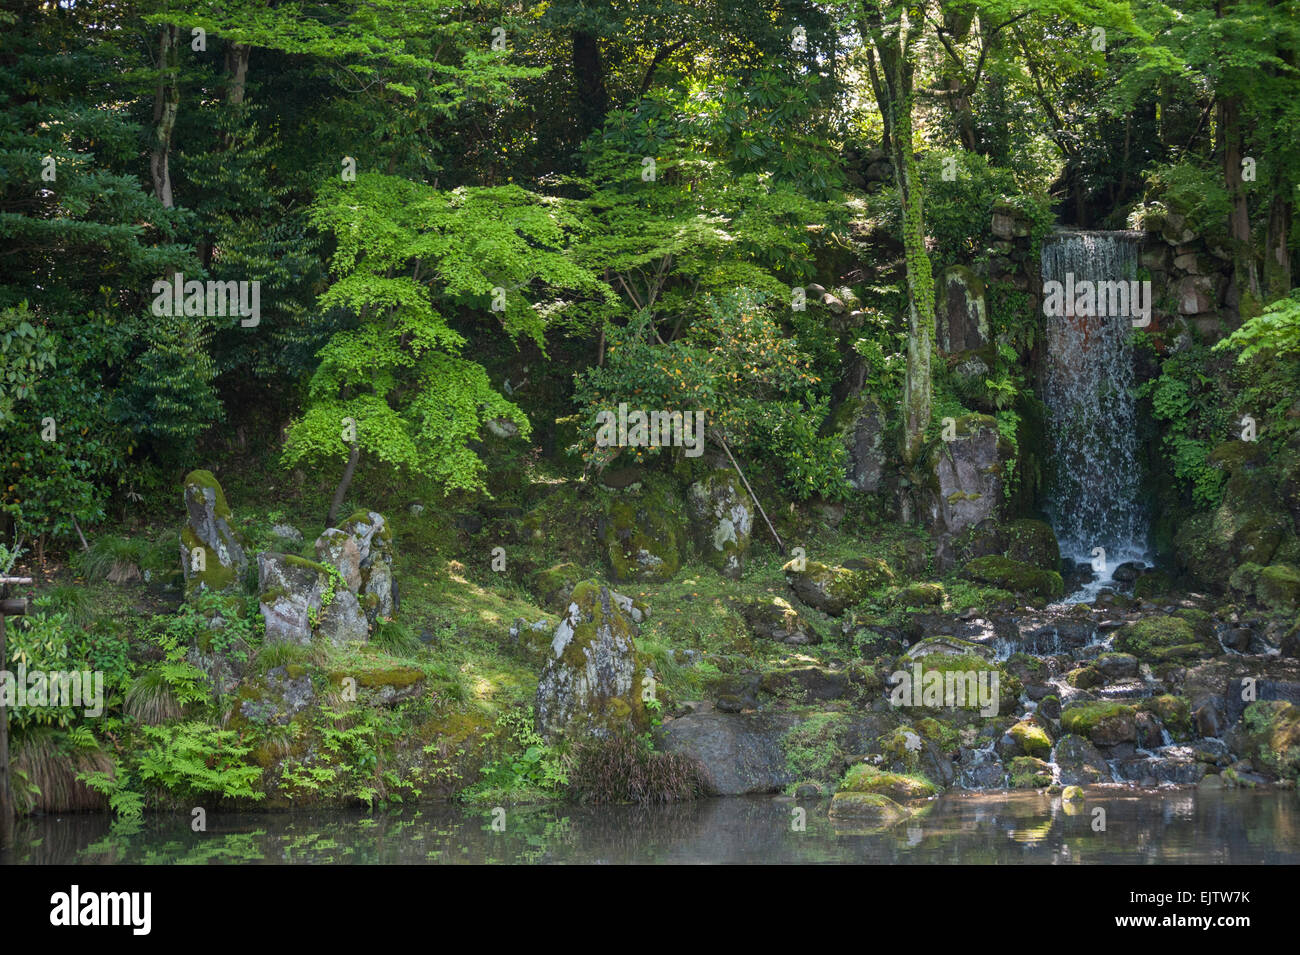 The midori-no-taki waterfall at Kenrokuen Garden, Japan, in early summer. Stock Photo